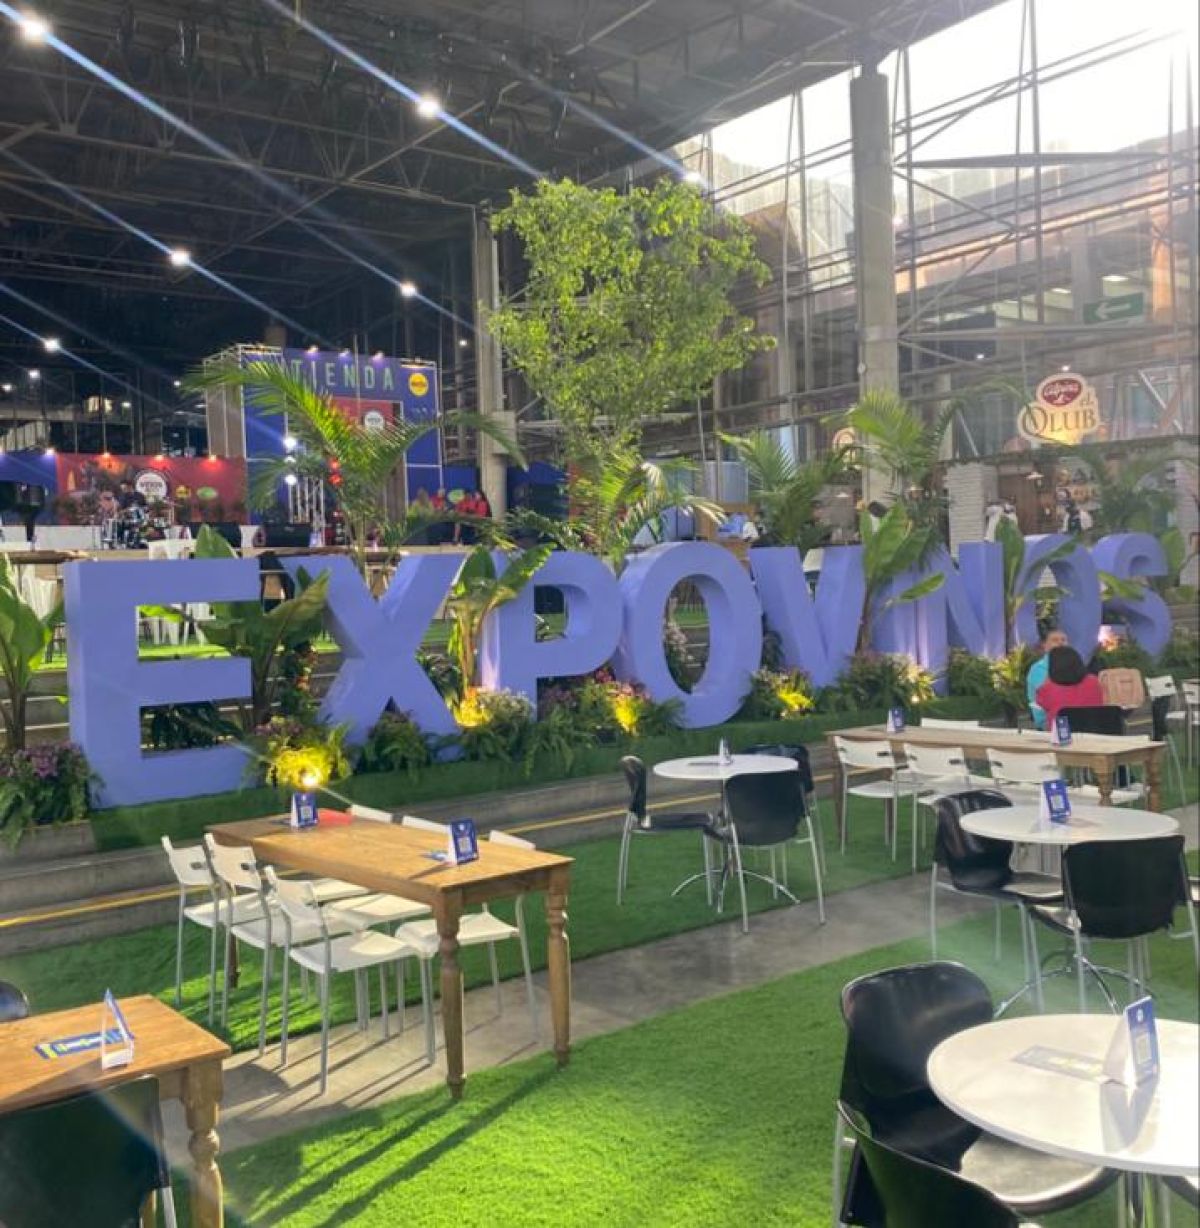  Asovinos pioneers sustainability at Expovinos Medellín 2022